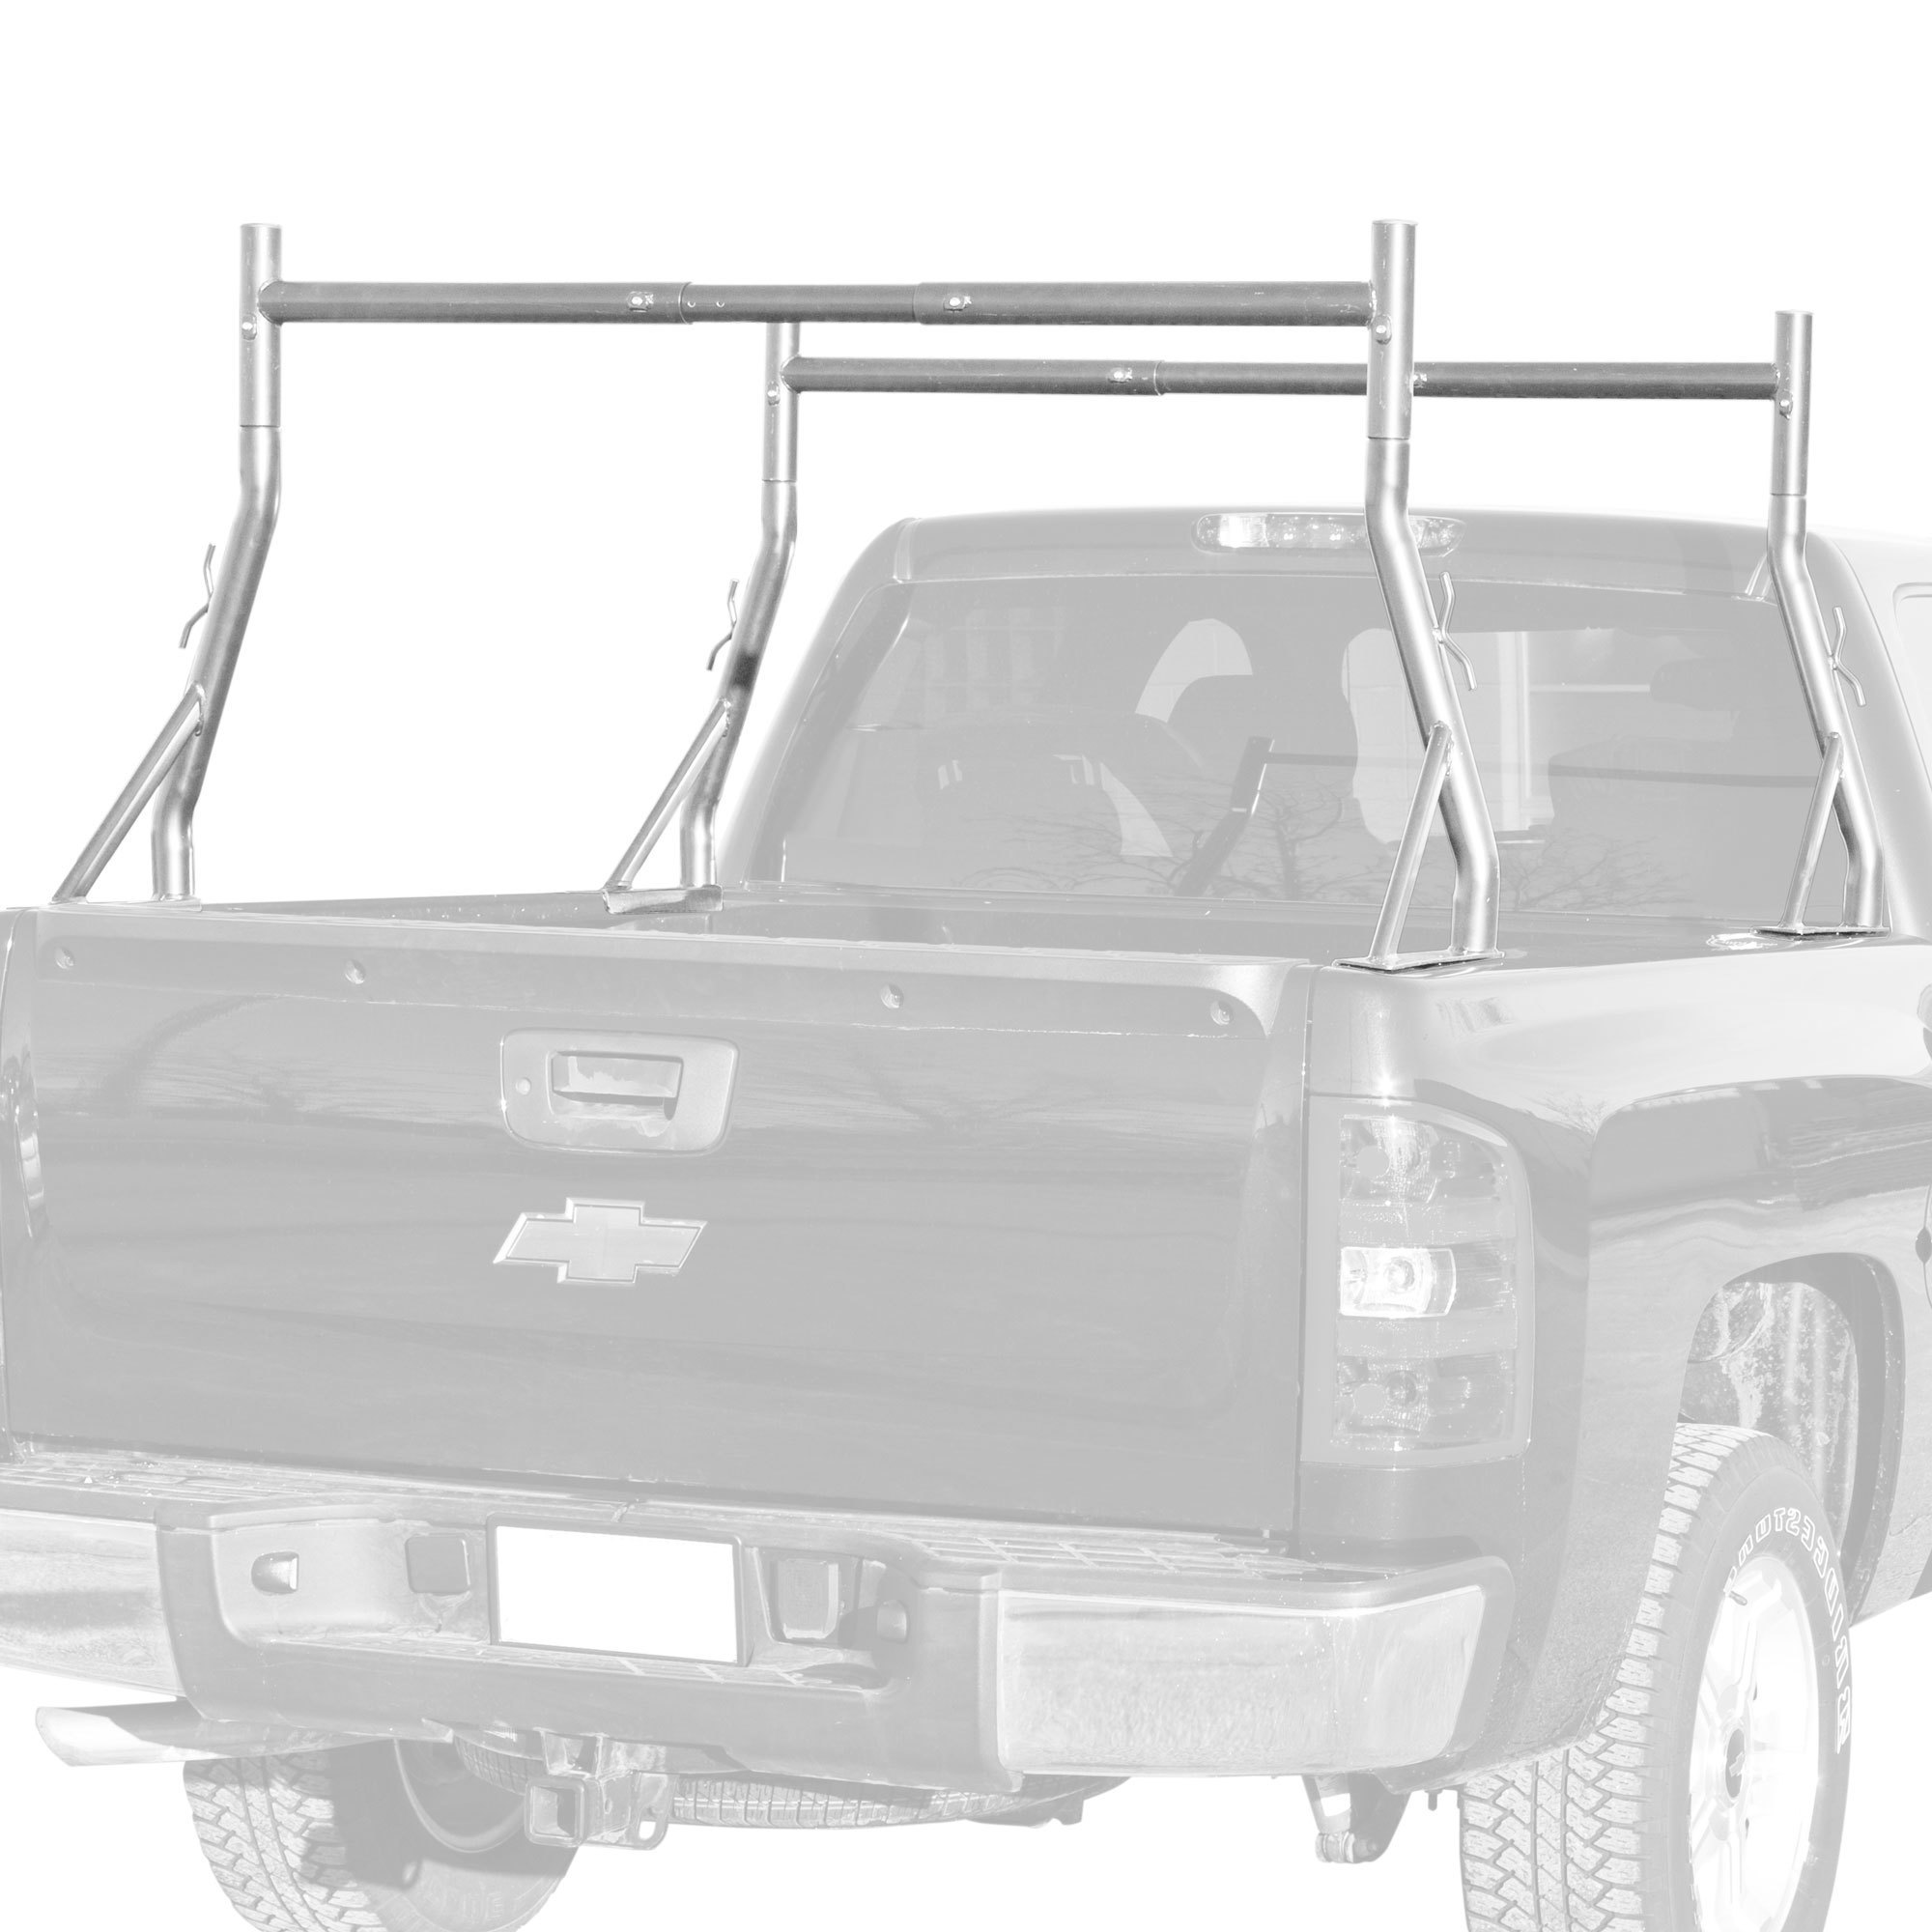 Elevate Outdoor, Alum. Universal Utility Truck Rack, Load Capacity 500 lb, Material Aluminum, Model SLR-RACK-DLX-ALUM